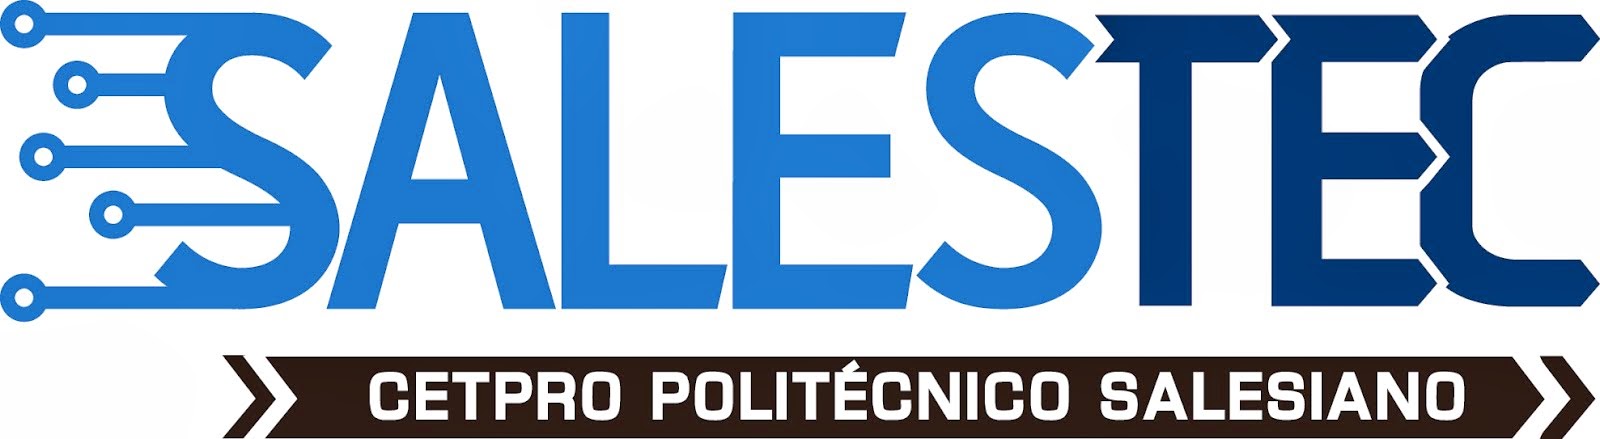 CETPRO POLITECNICO SALESIANO